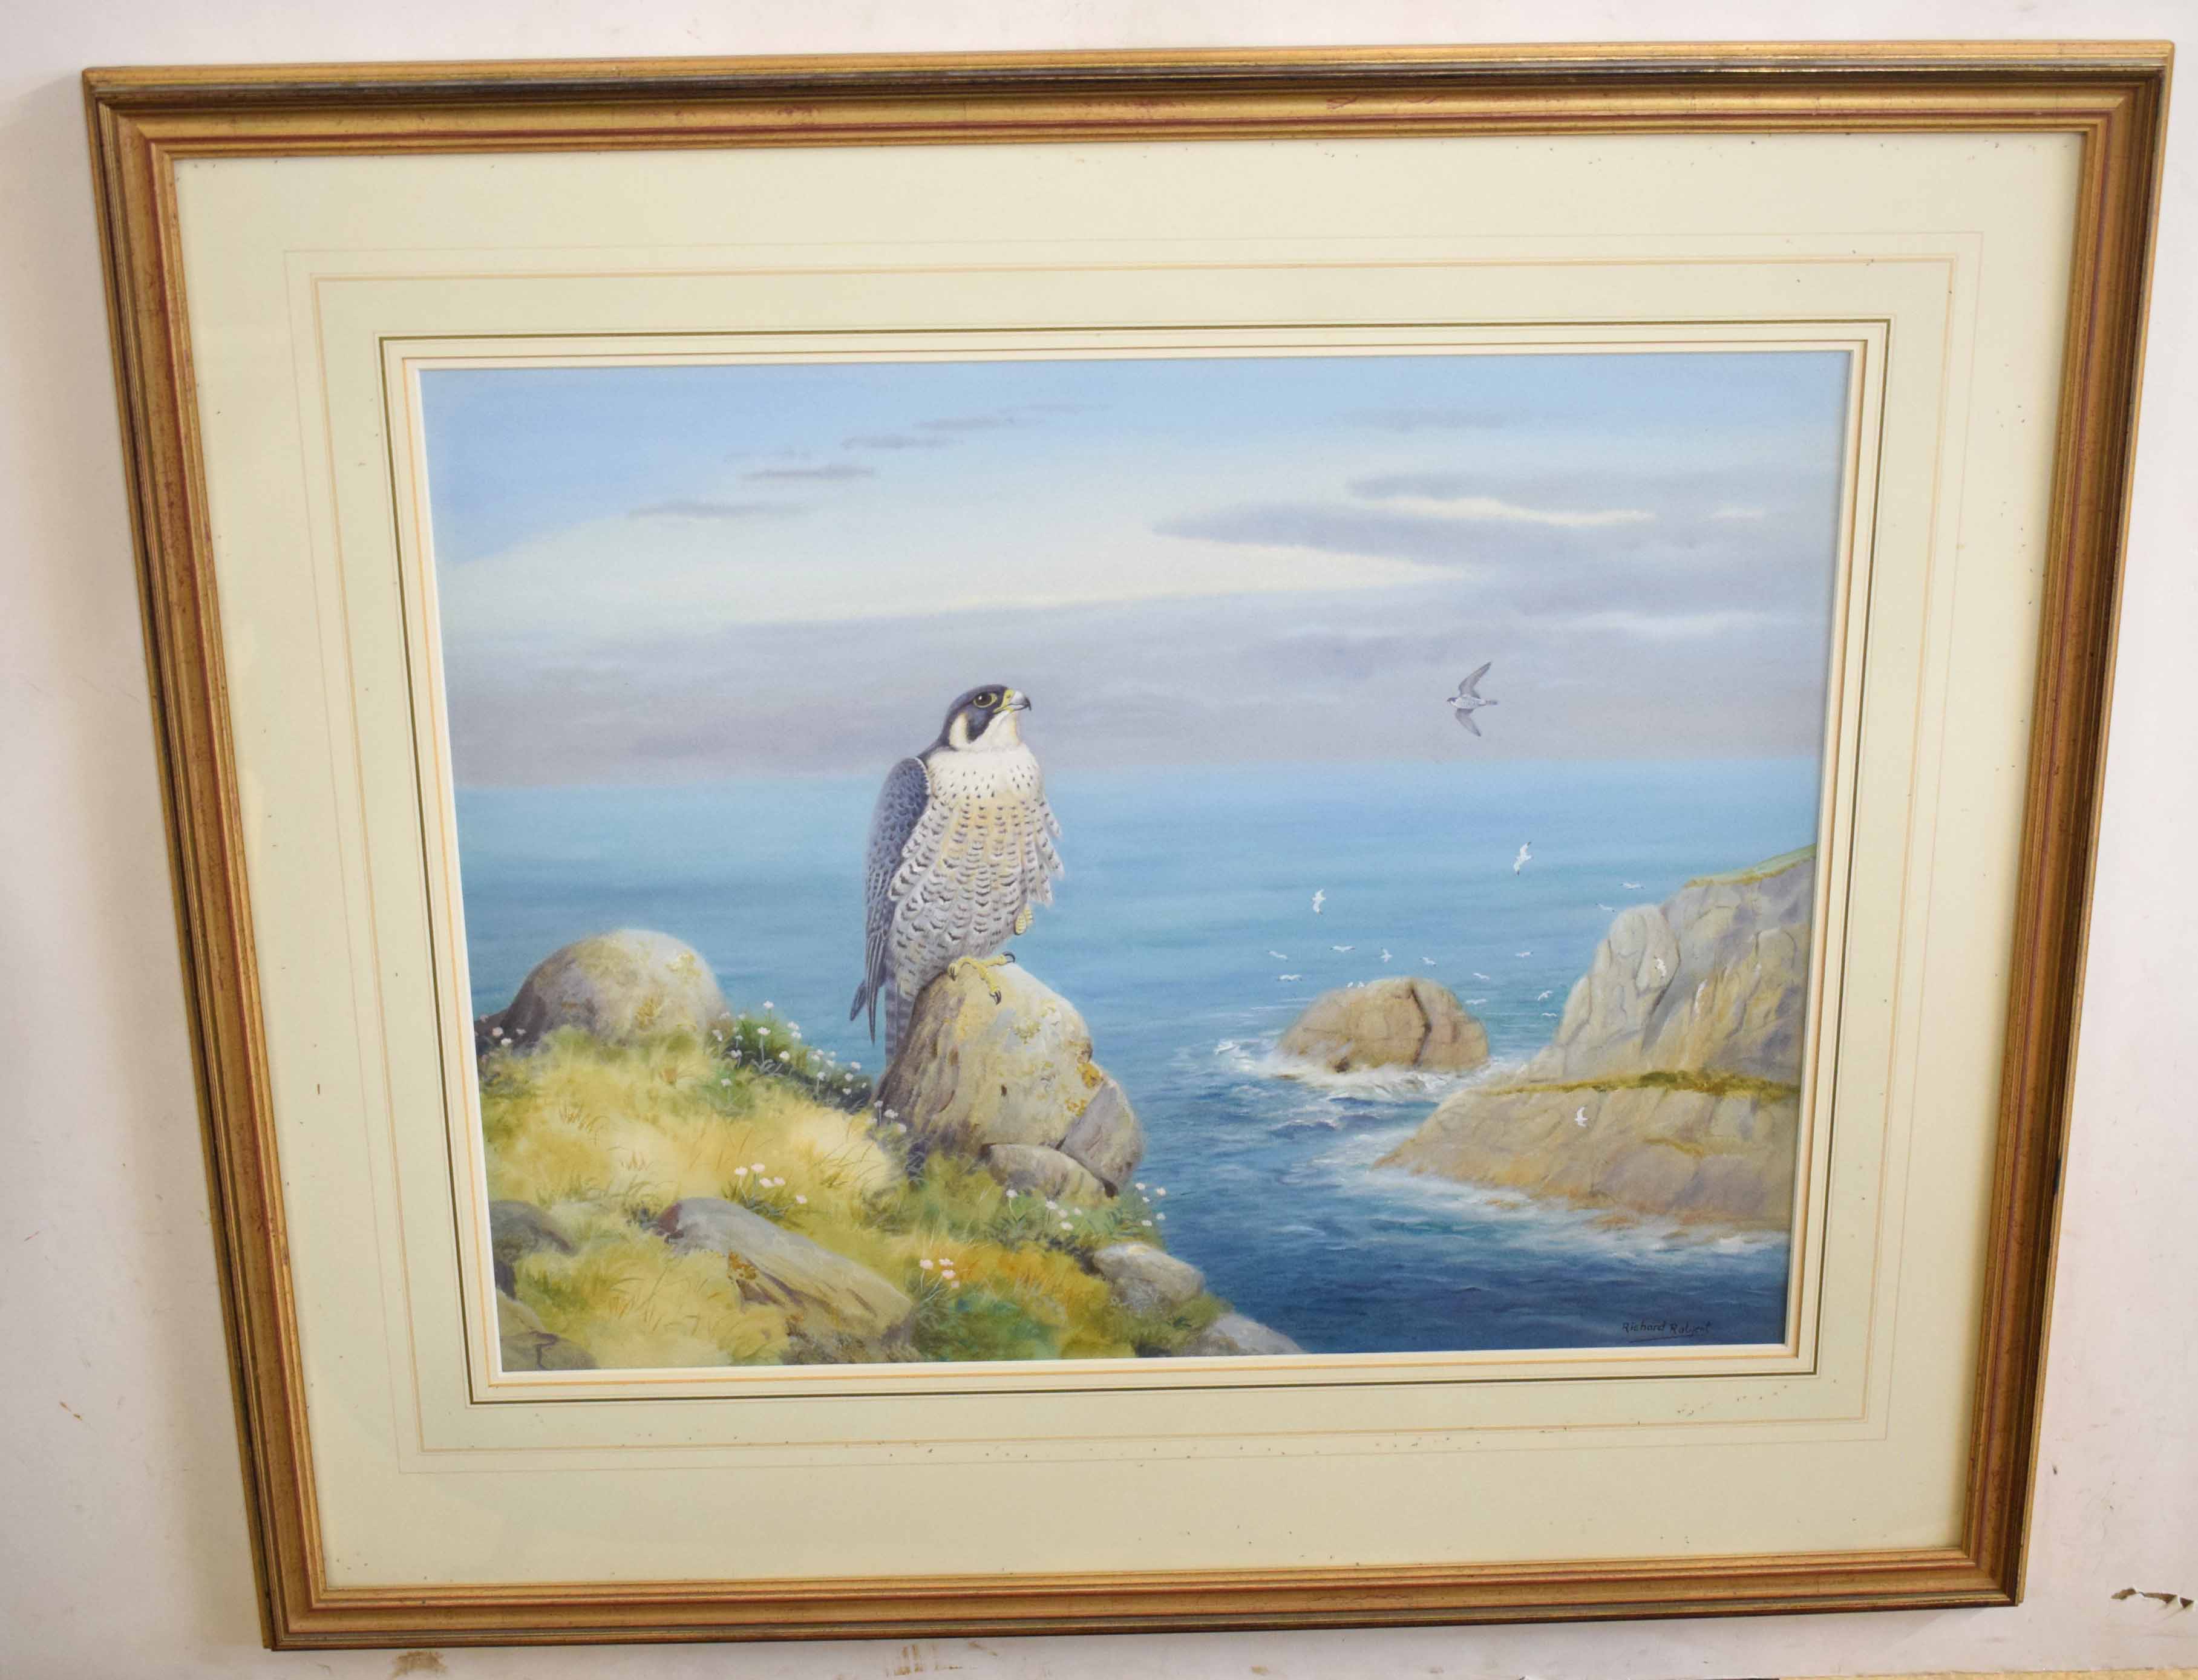 AR Richard Robjent (Born 1937), Peregrine Falcon in Coastal Landscape, watercolour, signed lower